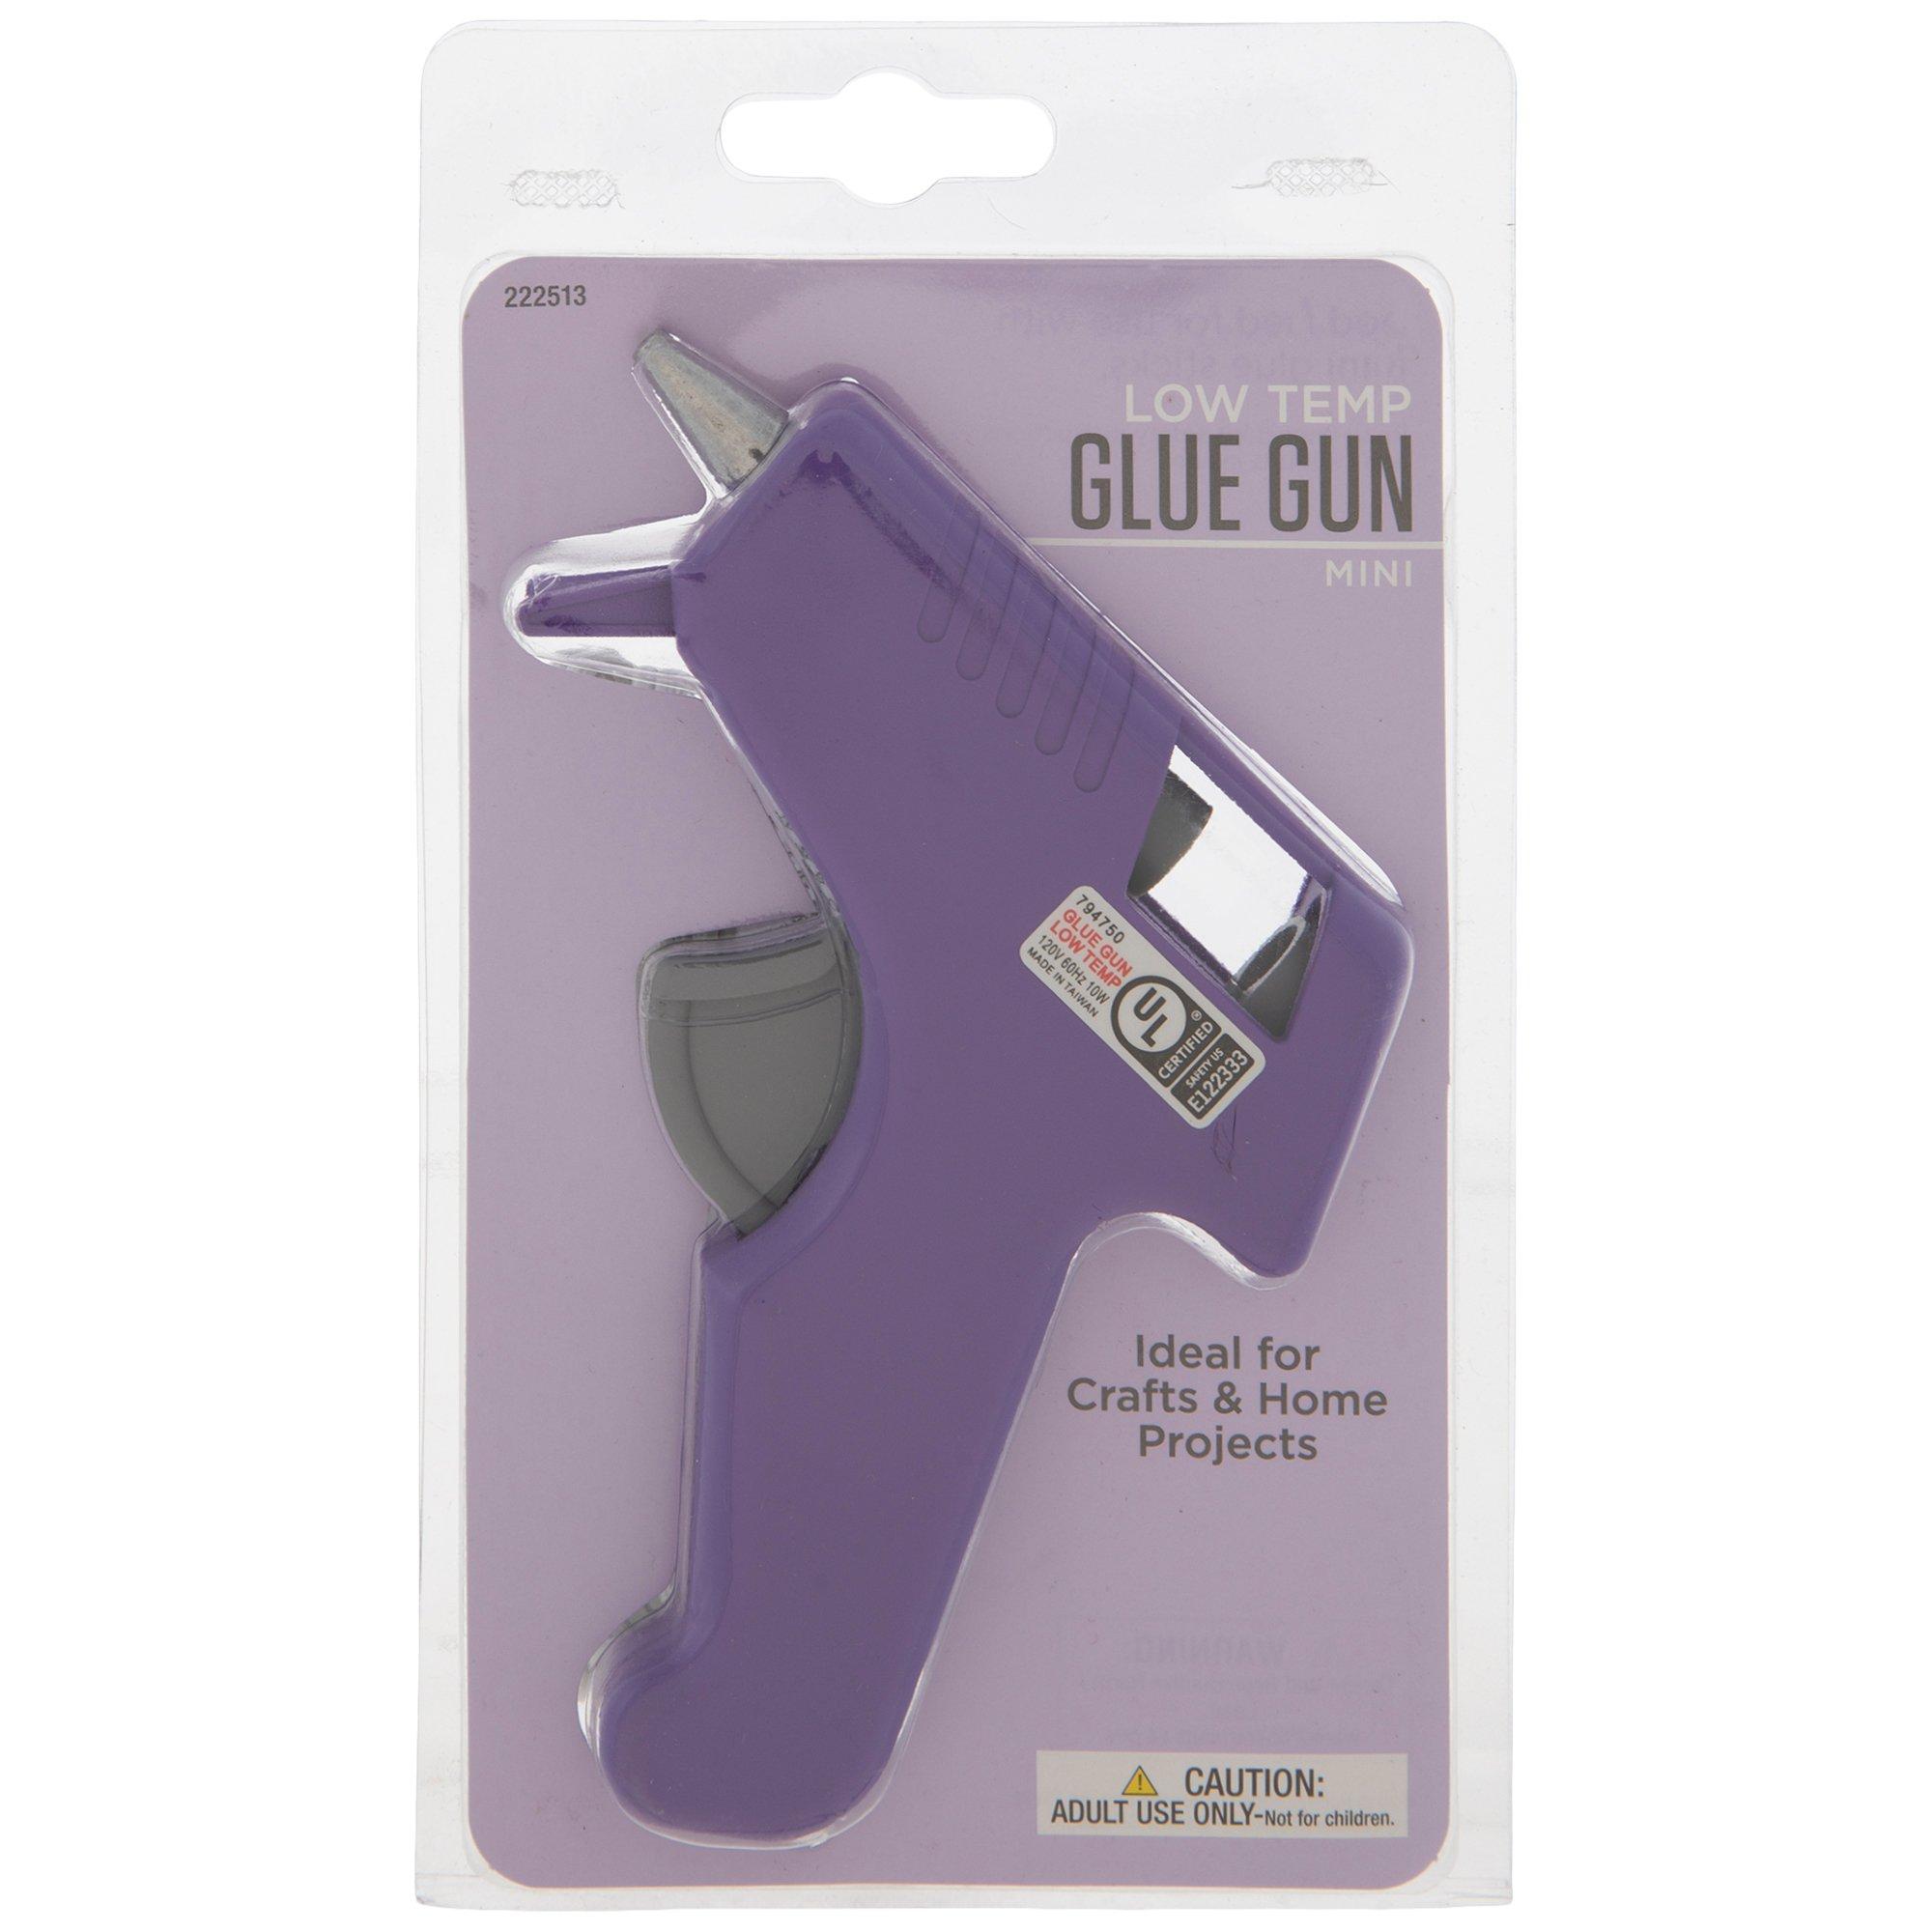 Surebonder Mini Low Temp Glue Gun - Crafts for Kids and Fun Home Activities